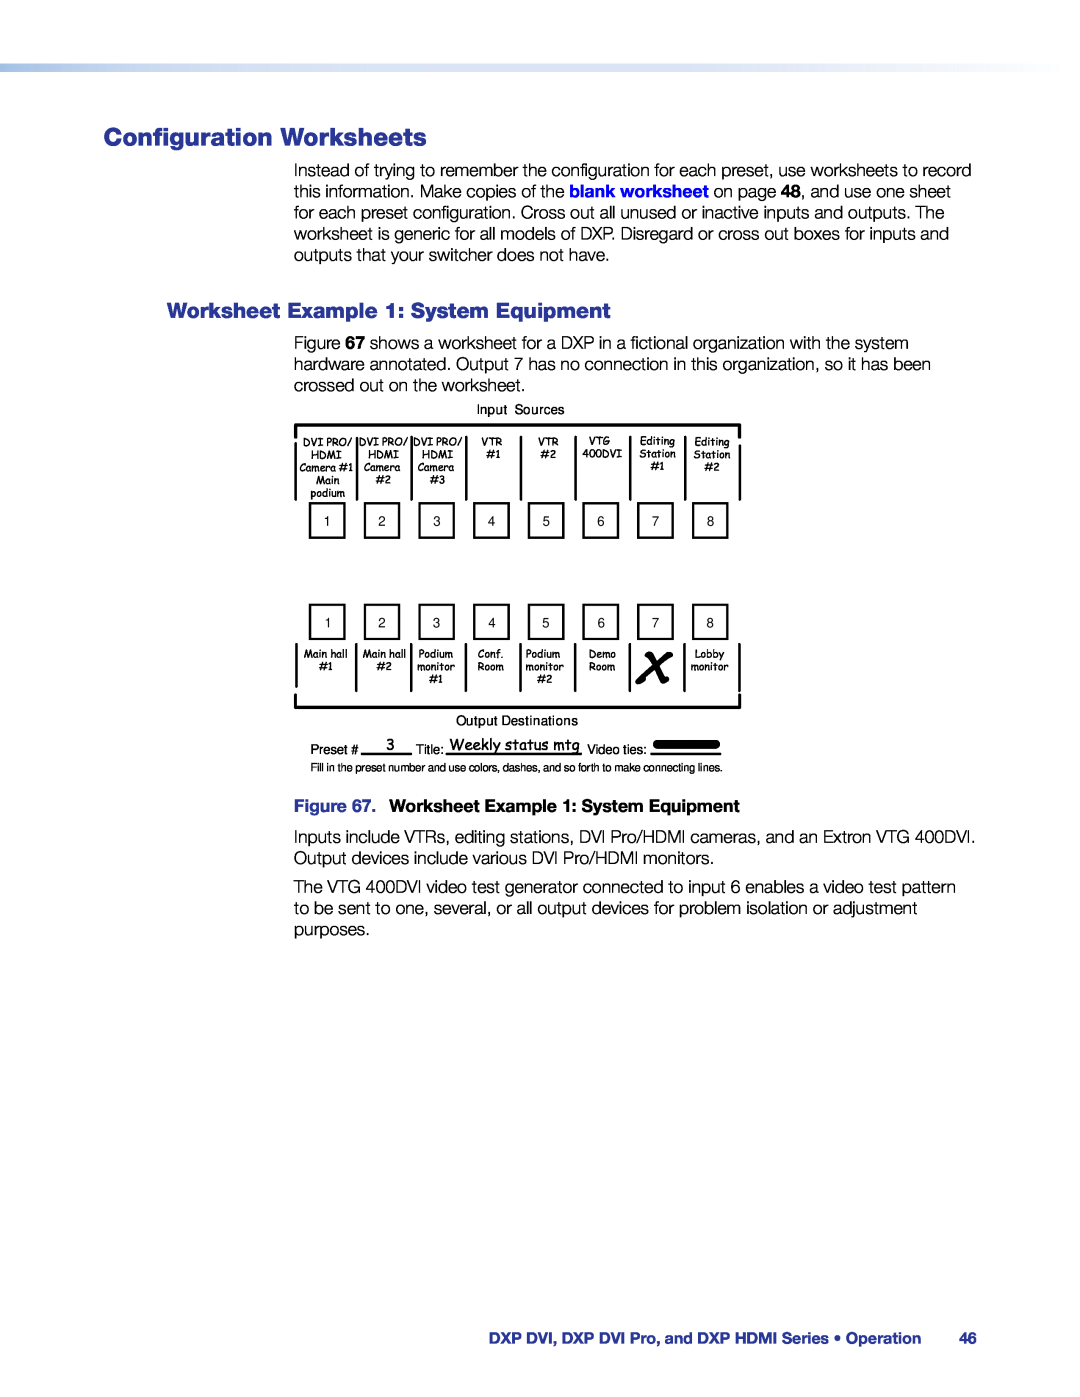 Extron electronic DXP DVI PRO manual Configuration Worksheets, Worksheet Example 1 System Equipment 